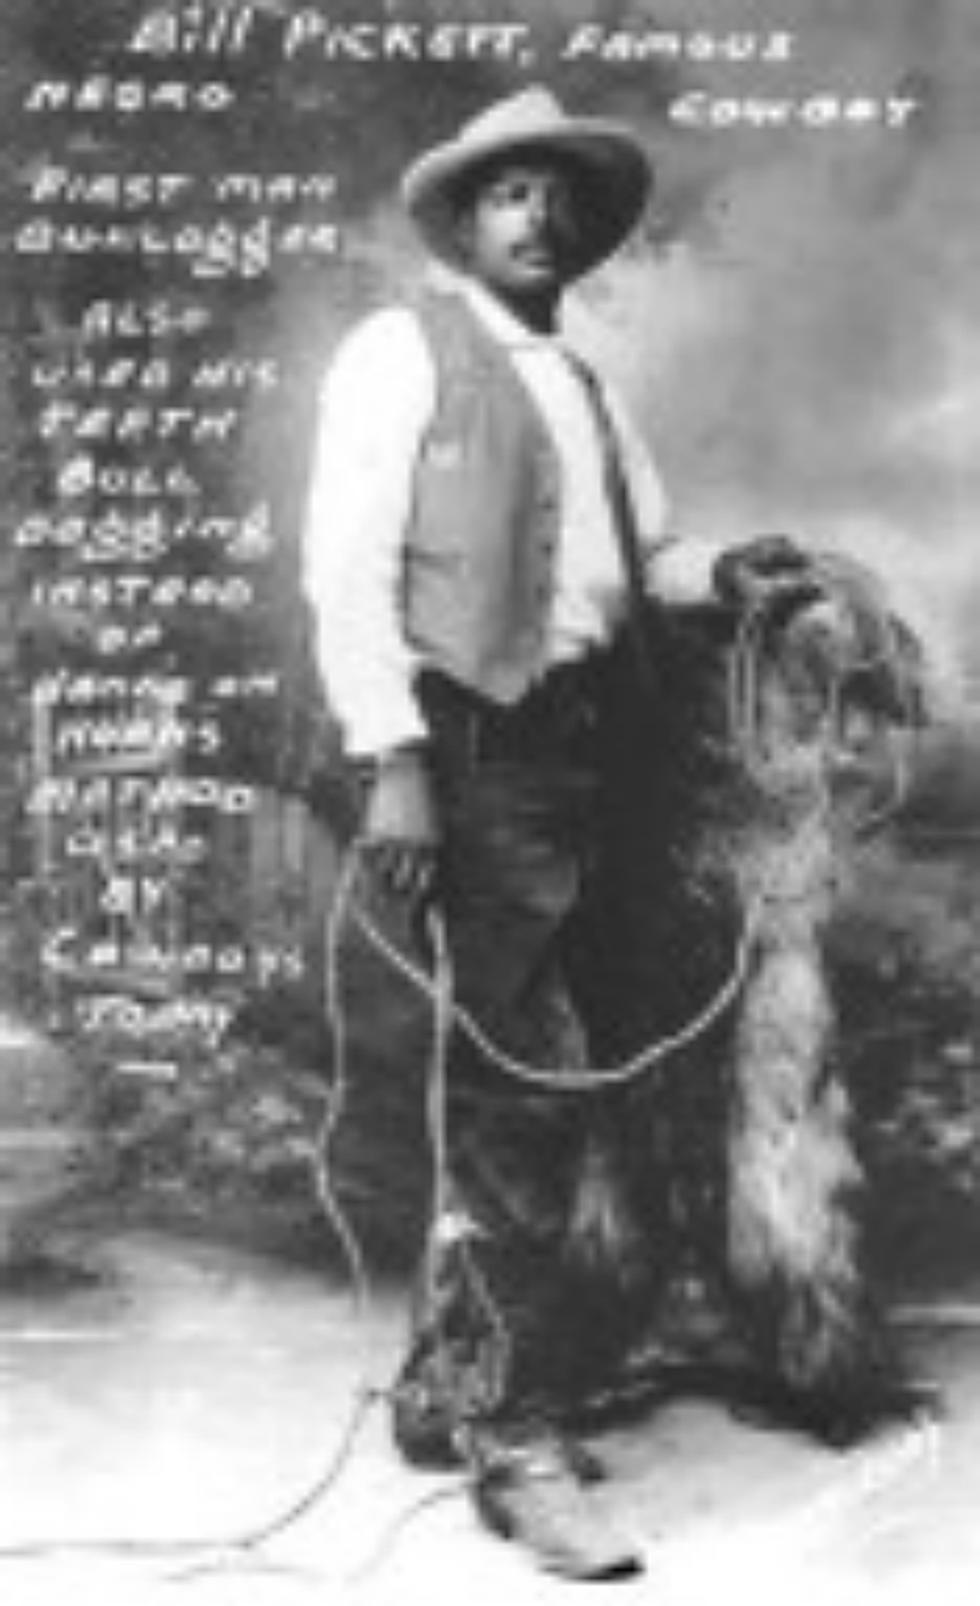 Legends of Cheyenne Frontier Days, Part 2: African-American Rodeo Pioneer Bill Pickett